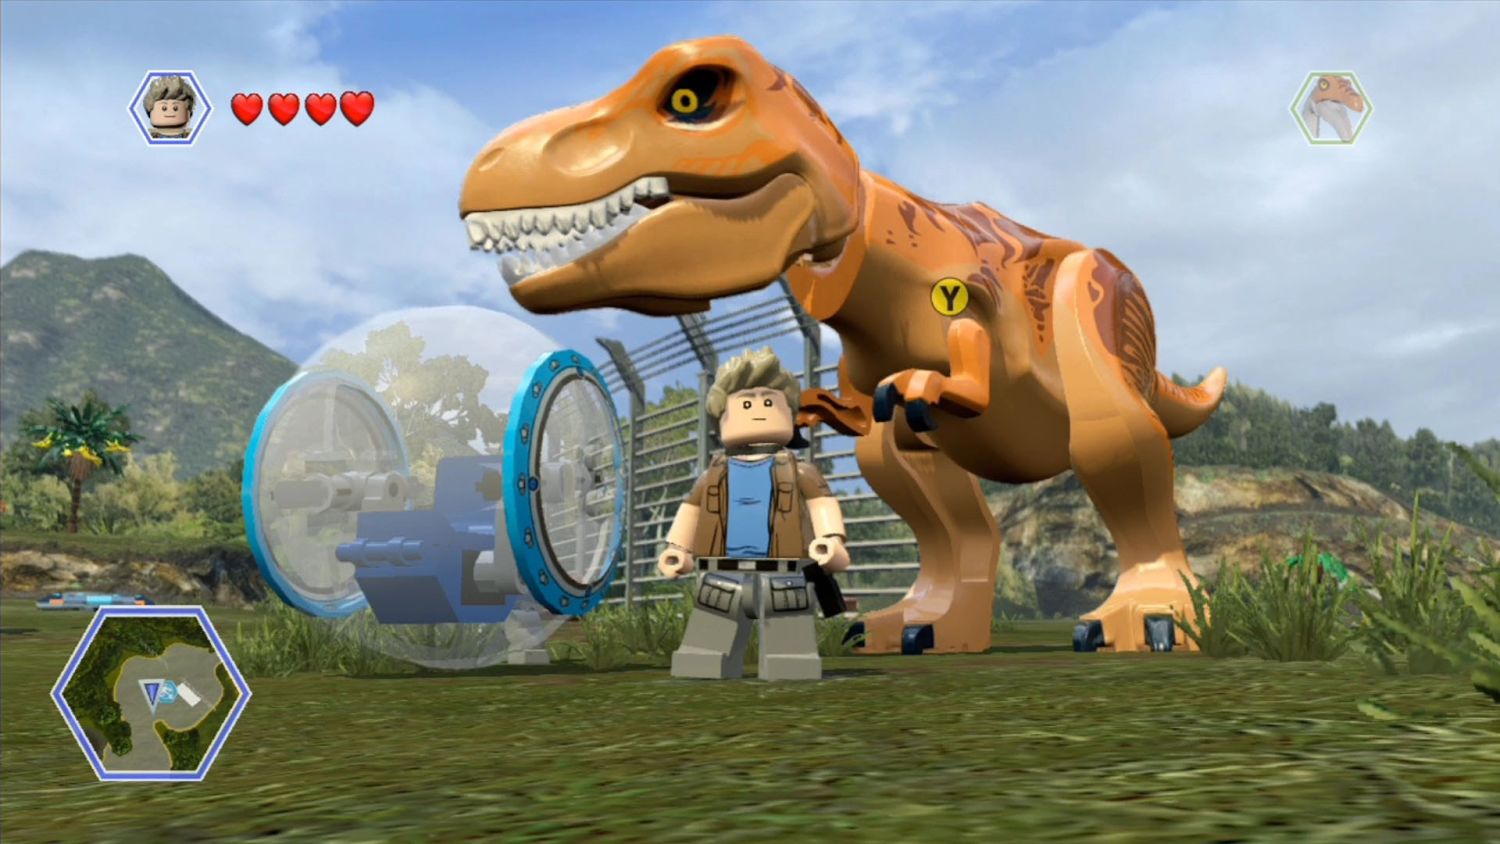 Jogo LEGO Jurassic World Nintendo Switch